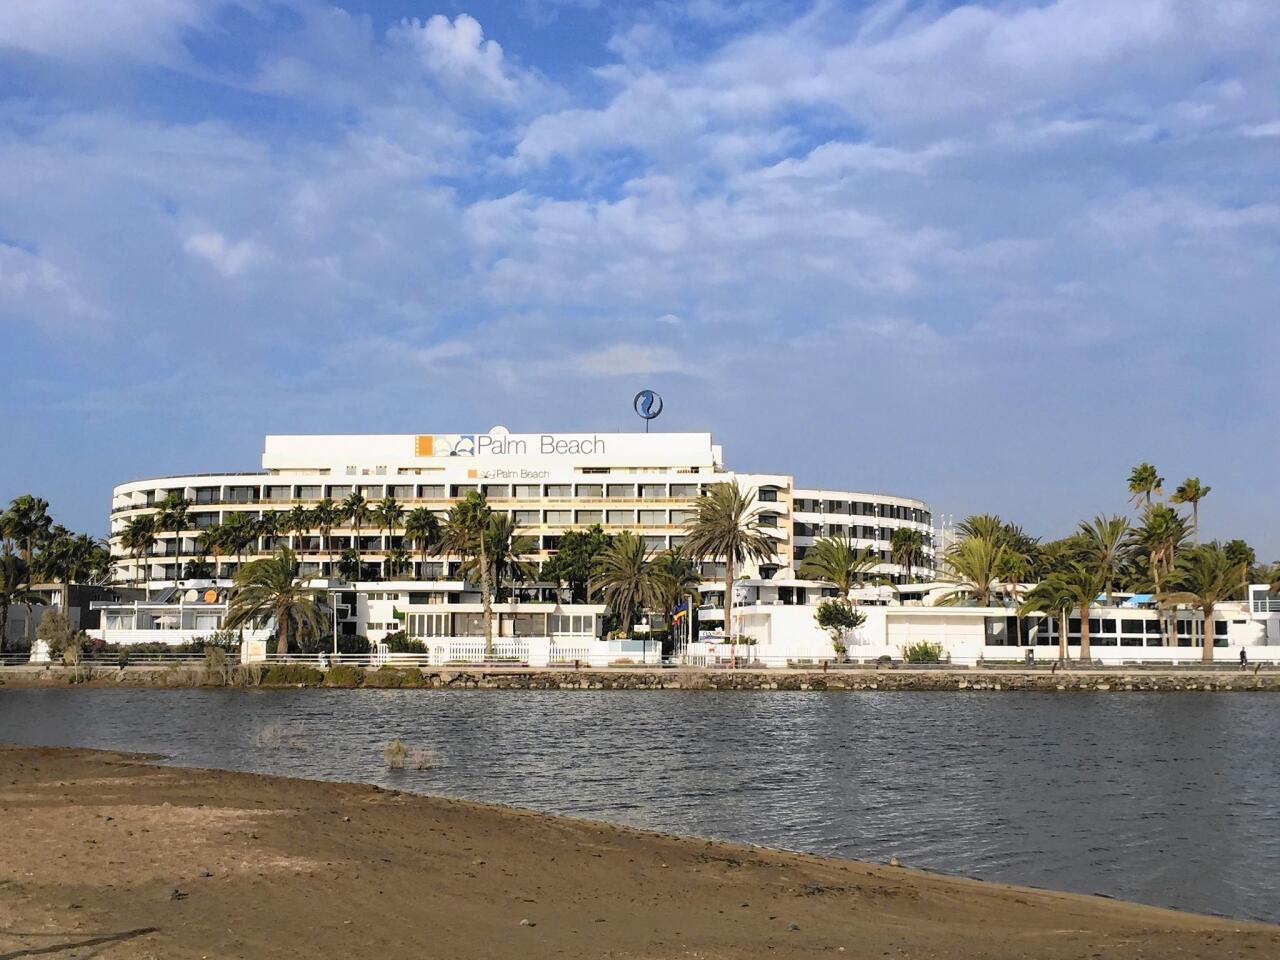 Seaside Palm Beach hotel